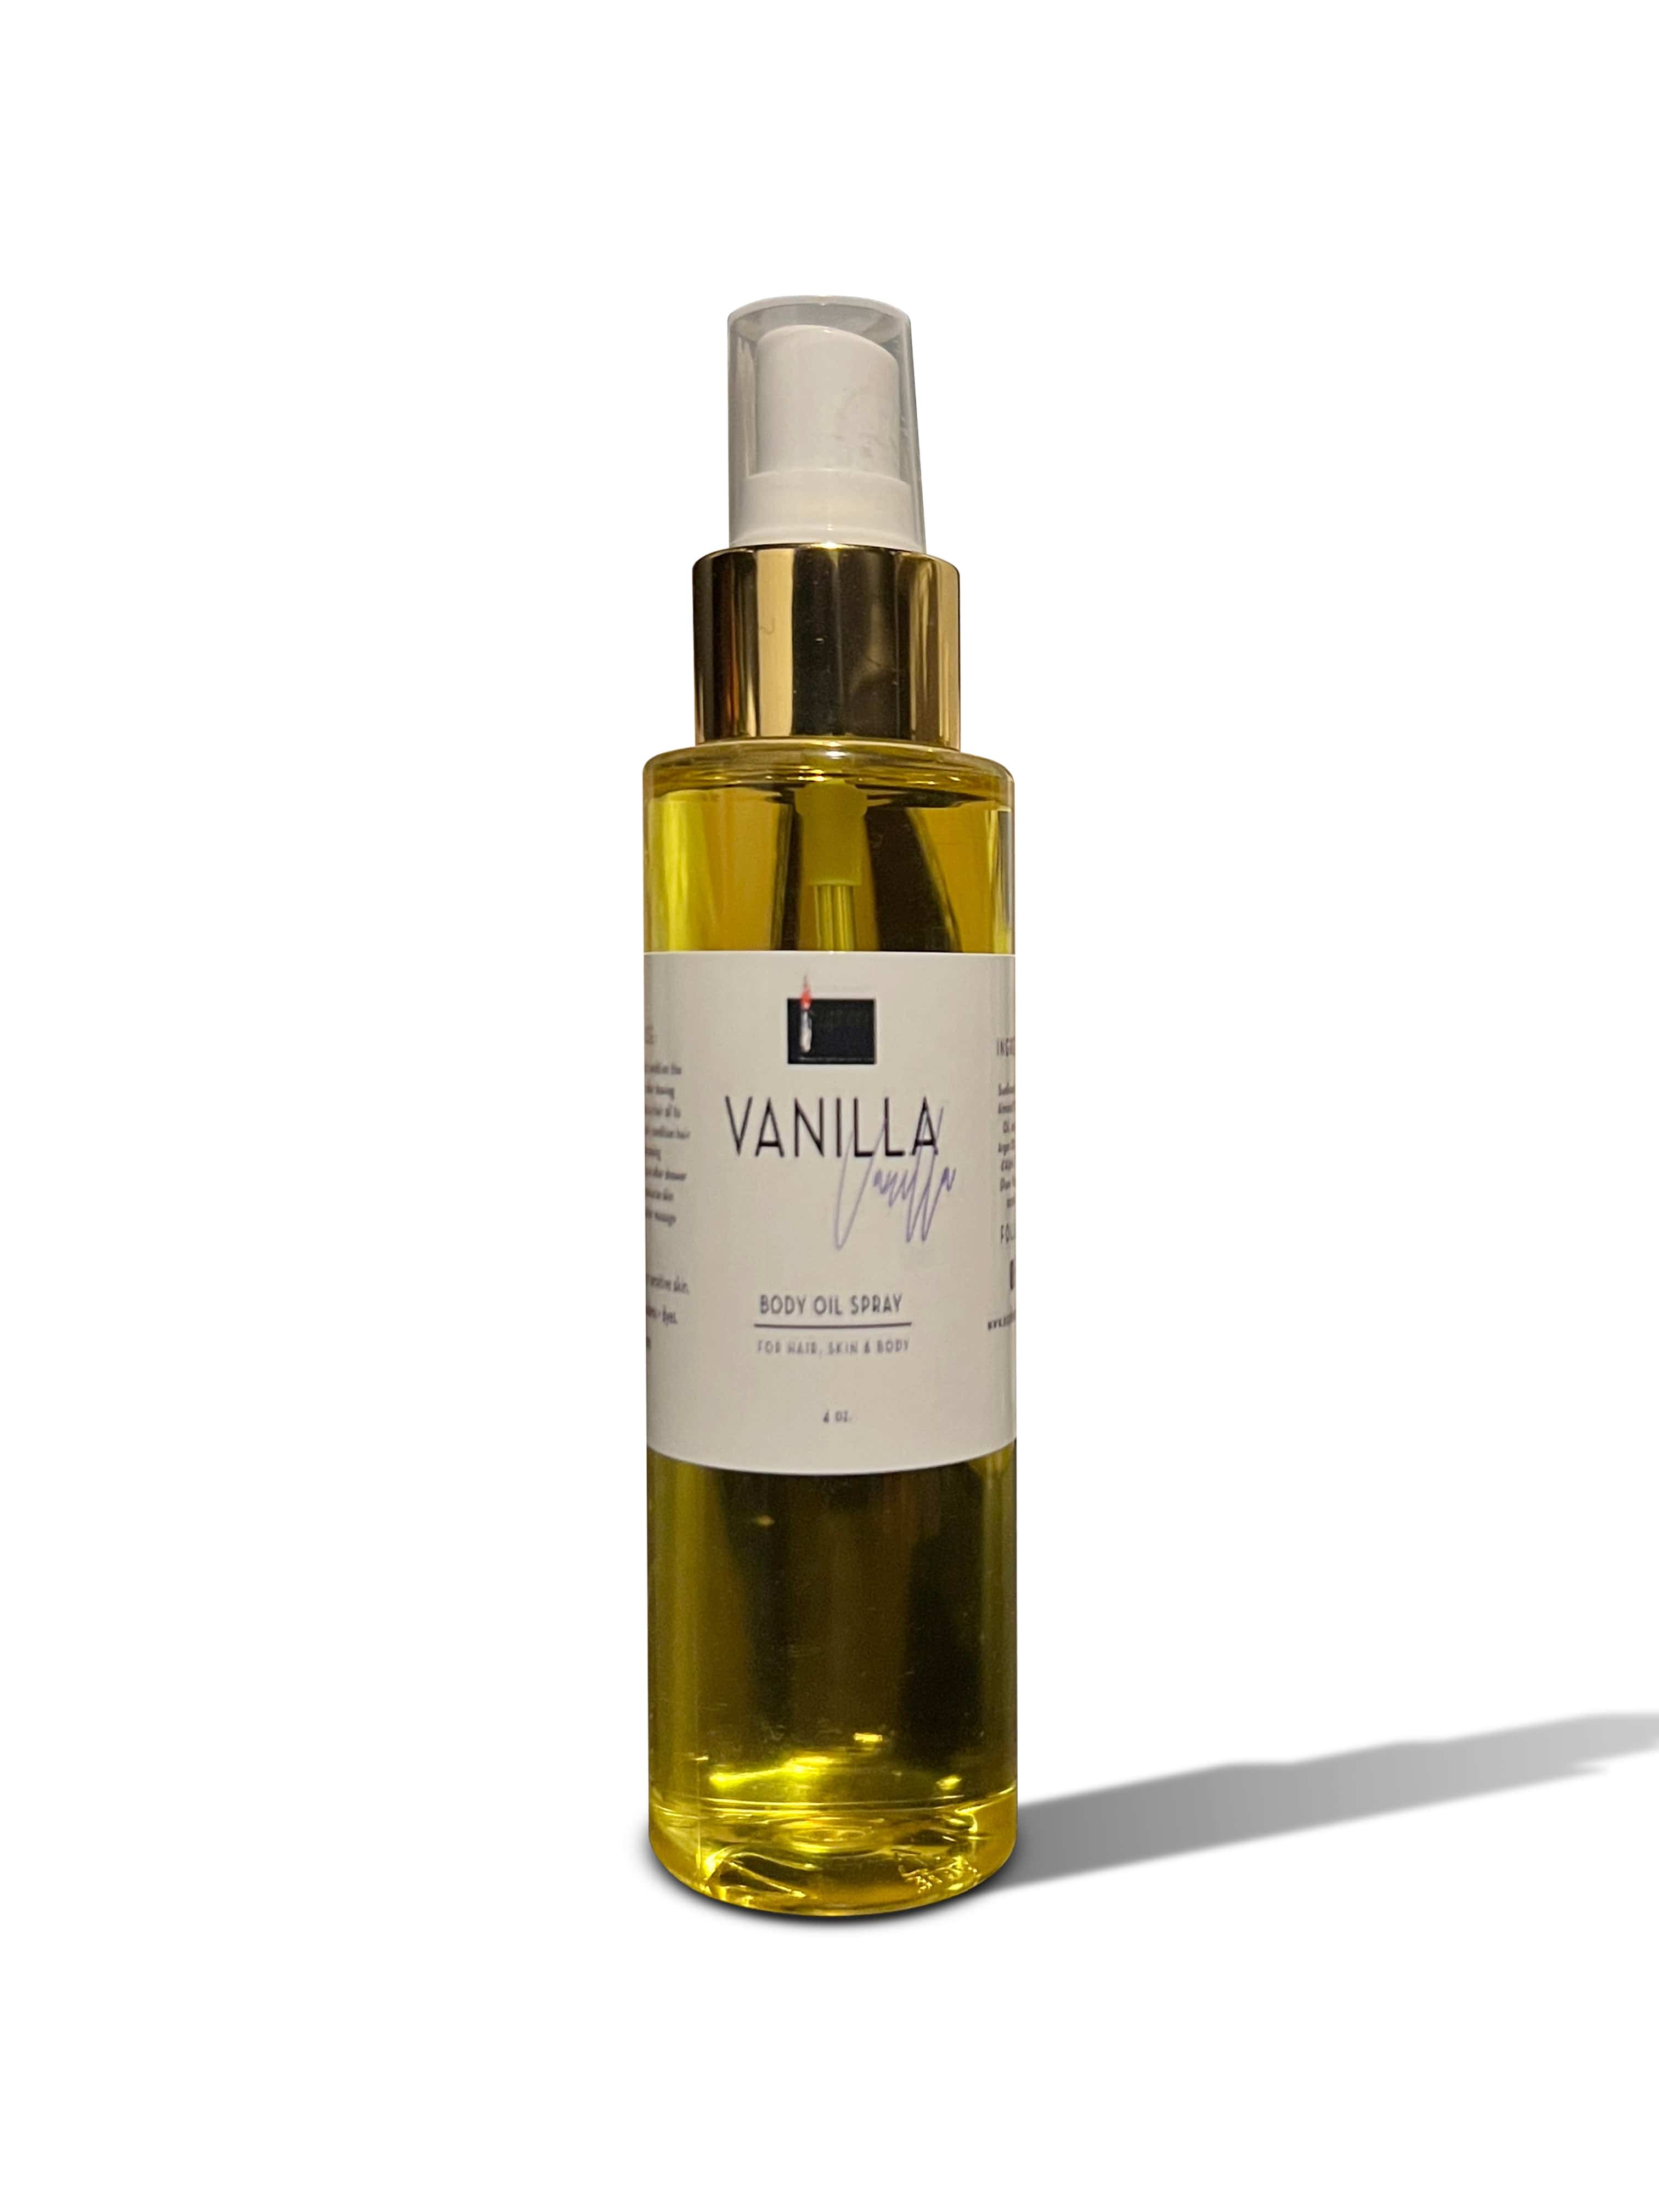 Vanilla Body Oil 4 Oz 